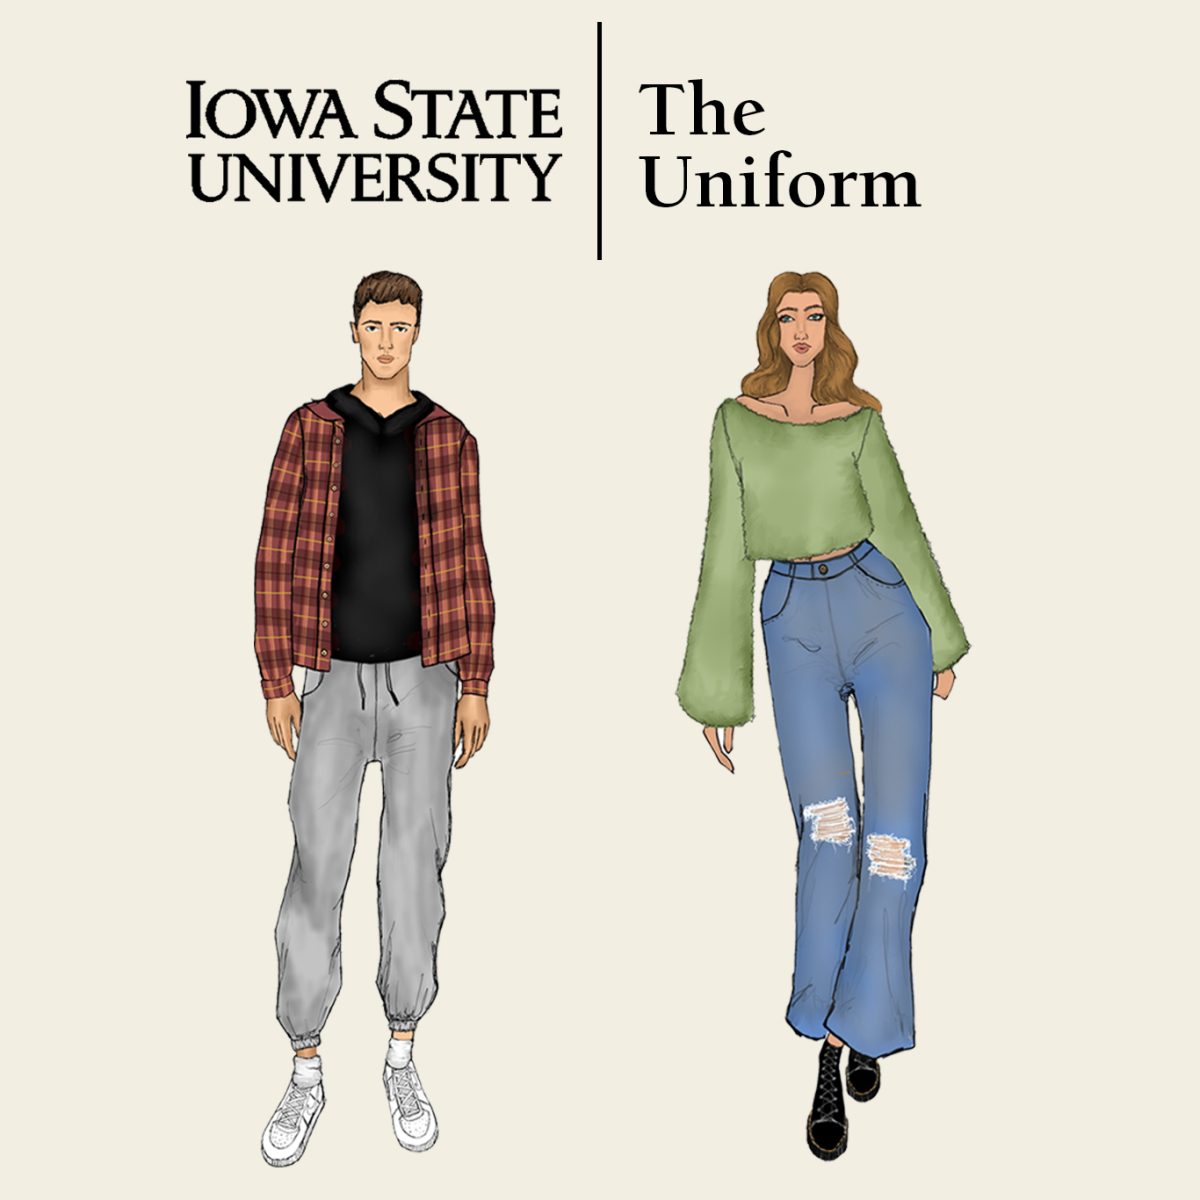 Iowa State: The Uniform